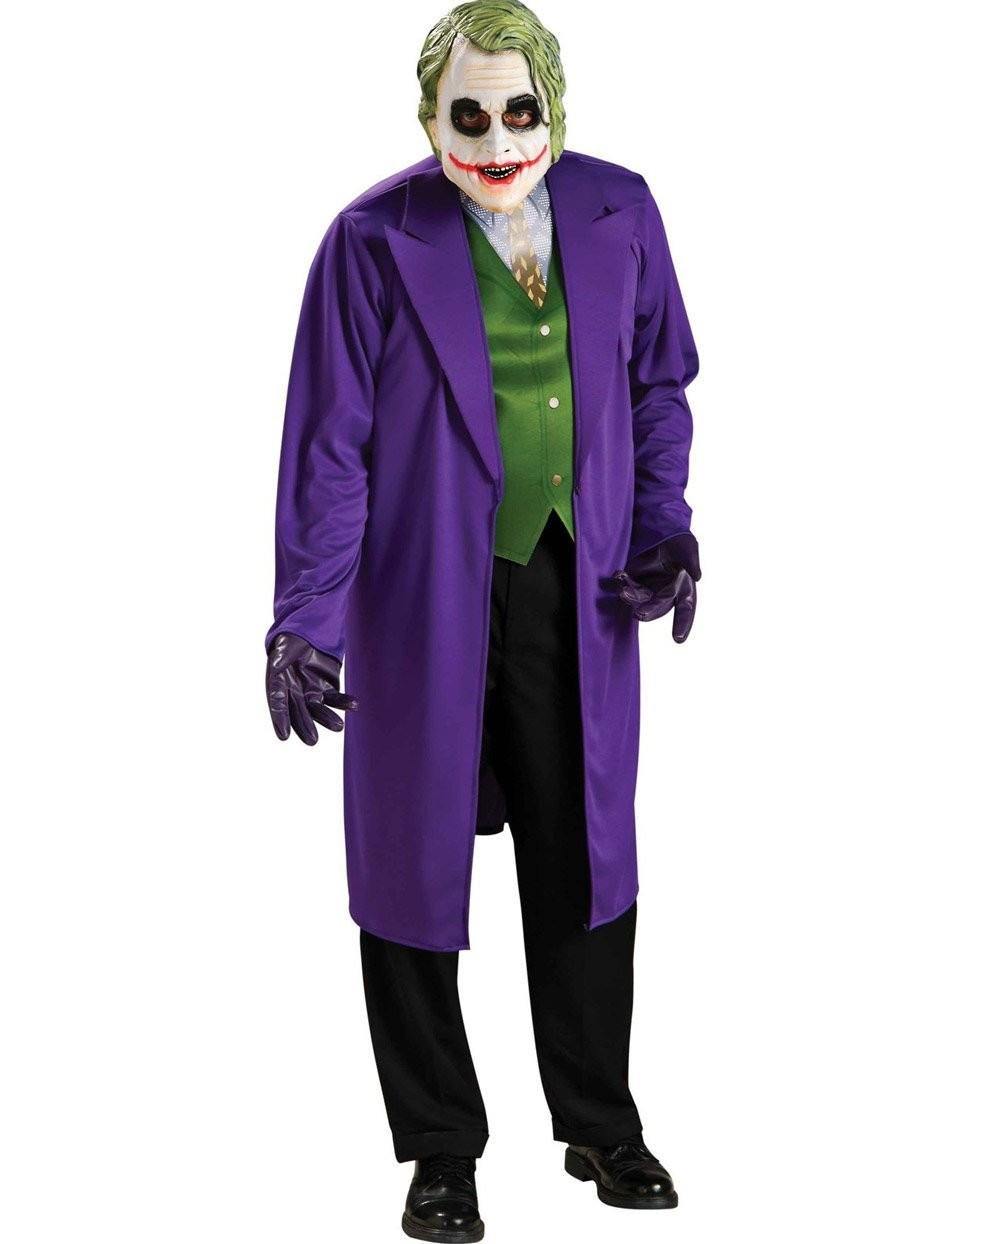 Best ideas about DIY Joker Costume Male
. Save or Pin Batman Dark Knight The Joker Mens Costume Now.